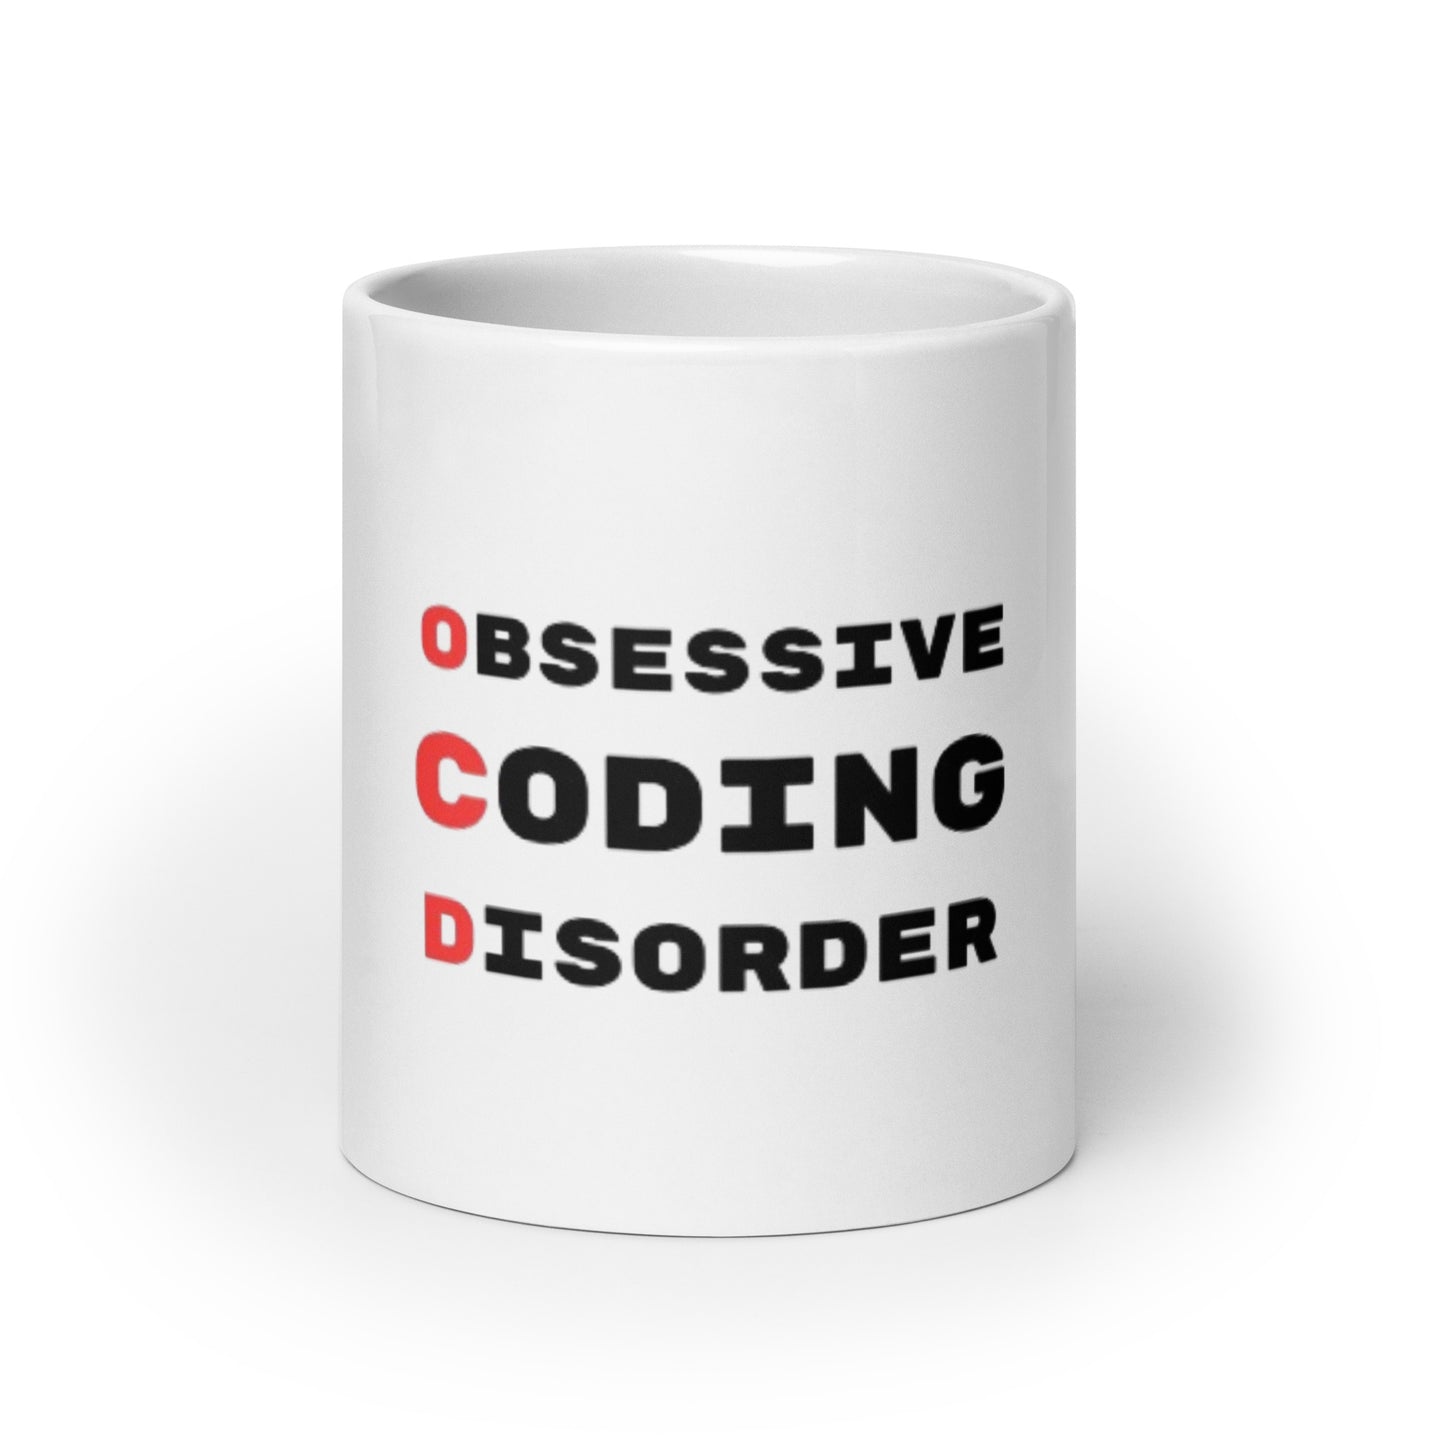 OCD glossy mug